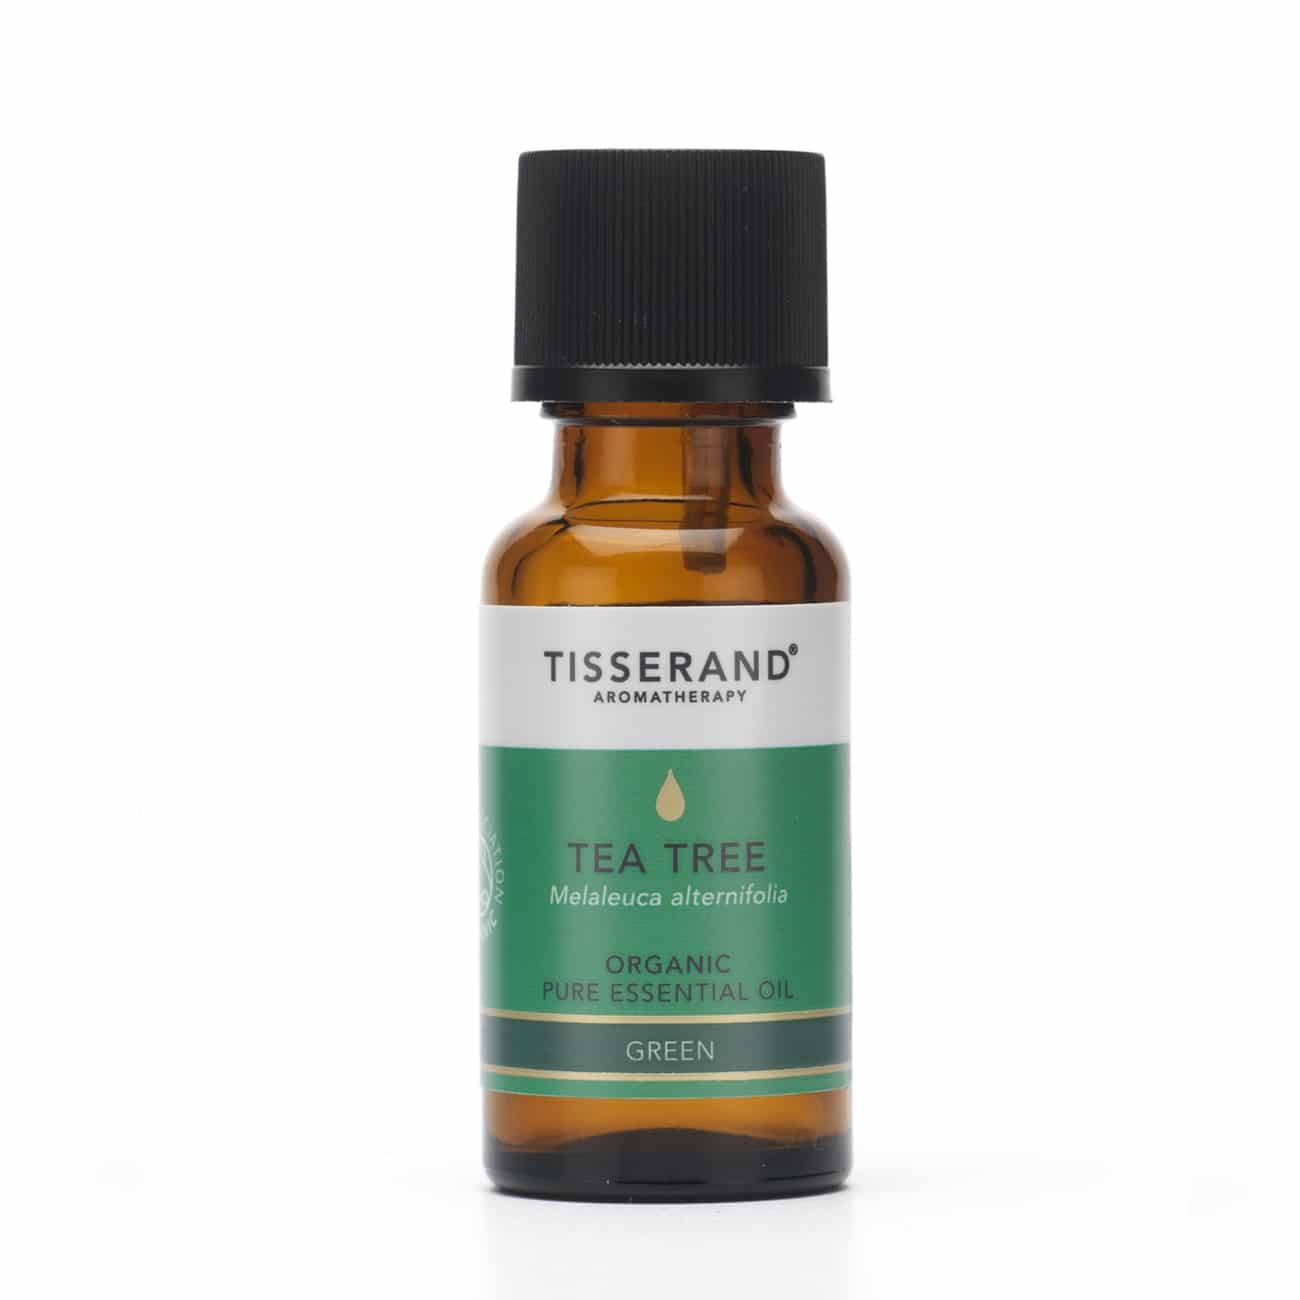 Tisserand - Tea Tree Organic Essential Oil 20ml